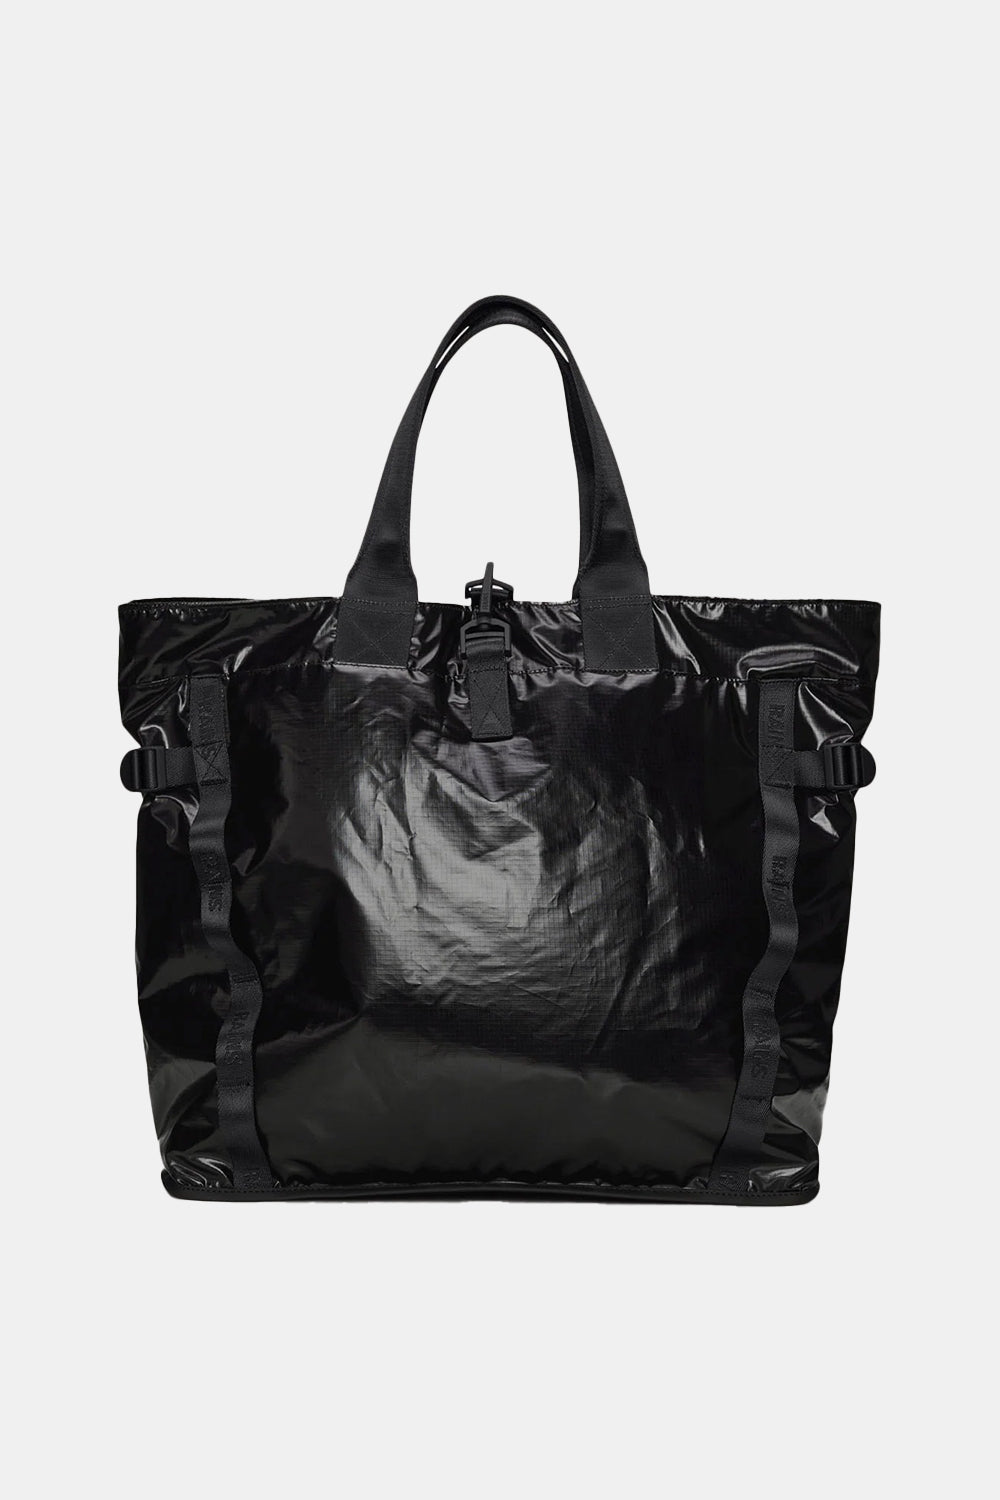 Rains Sibu Shopper Bag W3 (Black)
